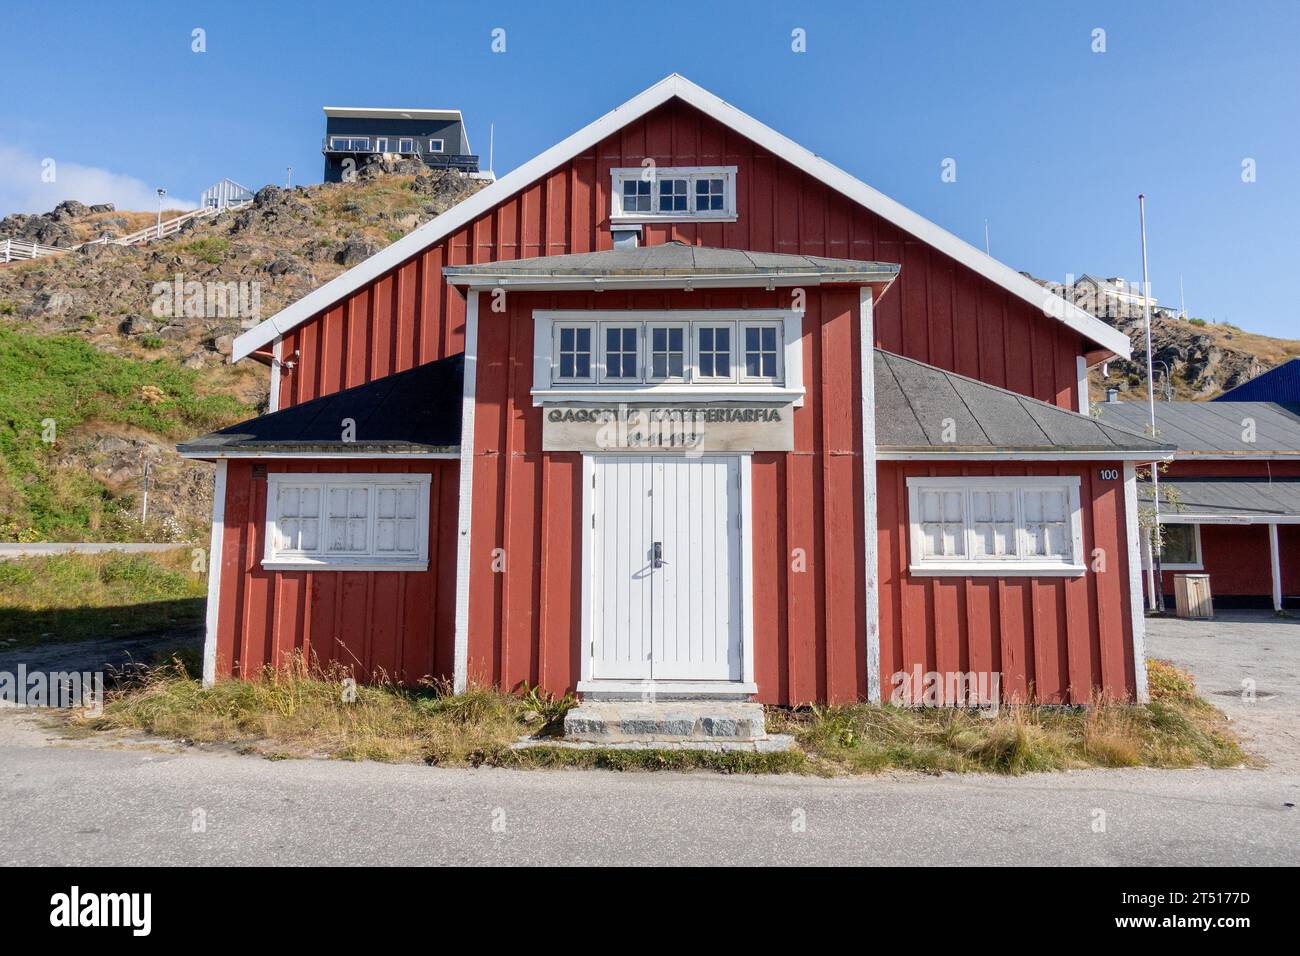 Qaqortoq Village Hall Qaqortoq, Sud du Groenland (Qaqortup Katersertarfia) Construit en 1937 Red Building Exterior Banque D'Images